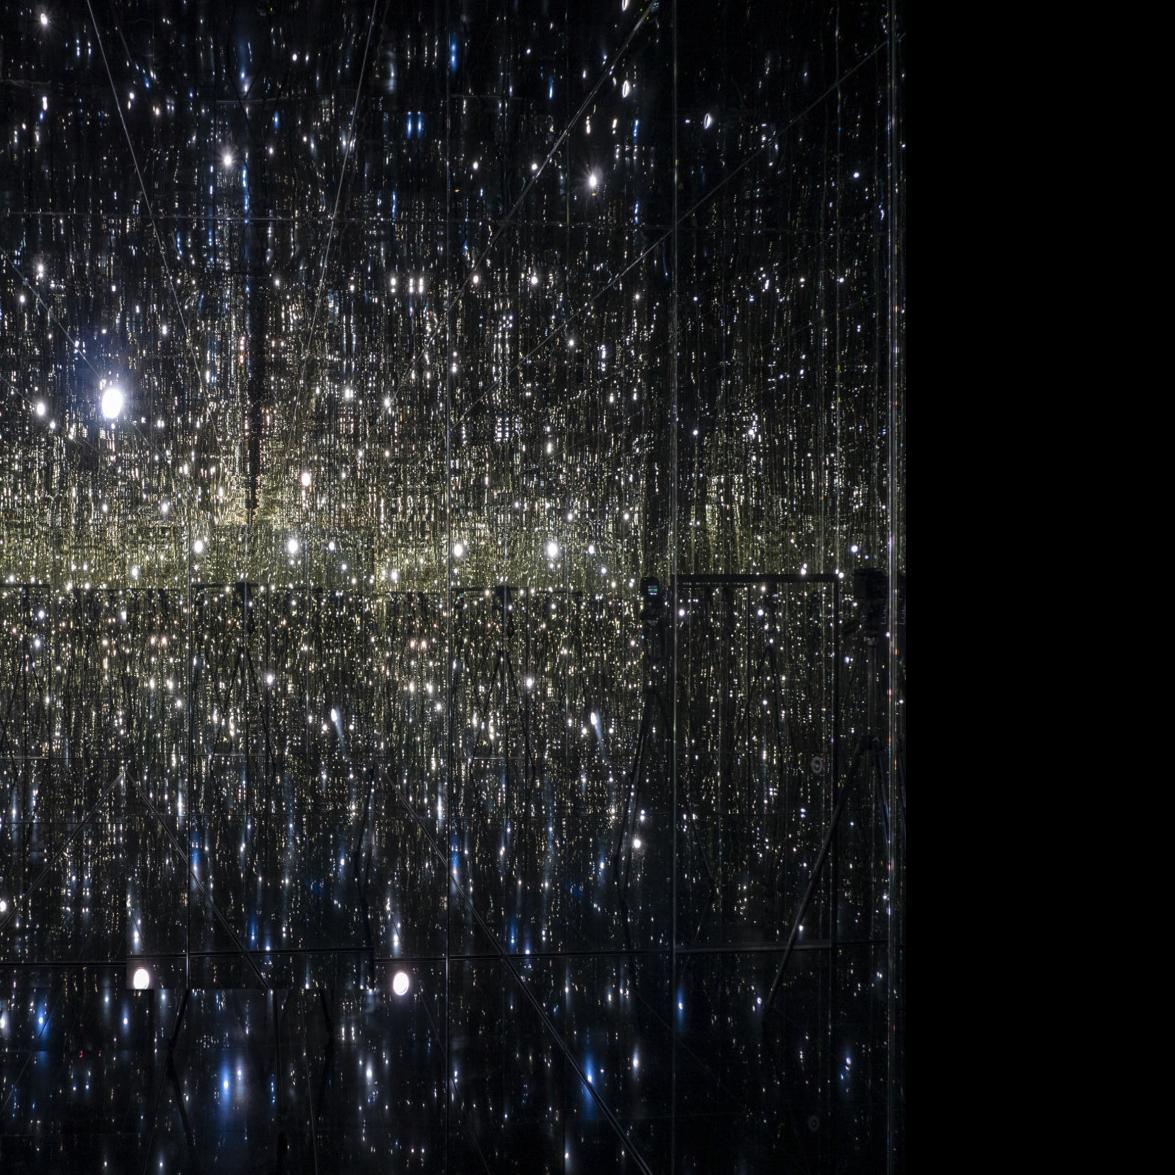 Yayoi Kusama Infinity Mirror Room Opens At Aspen Art Museum